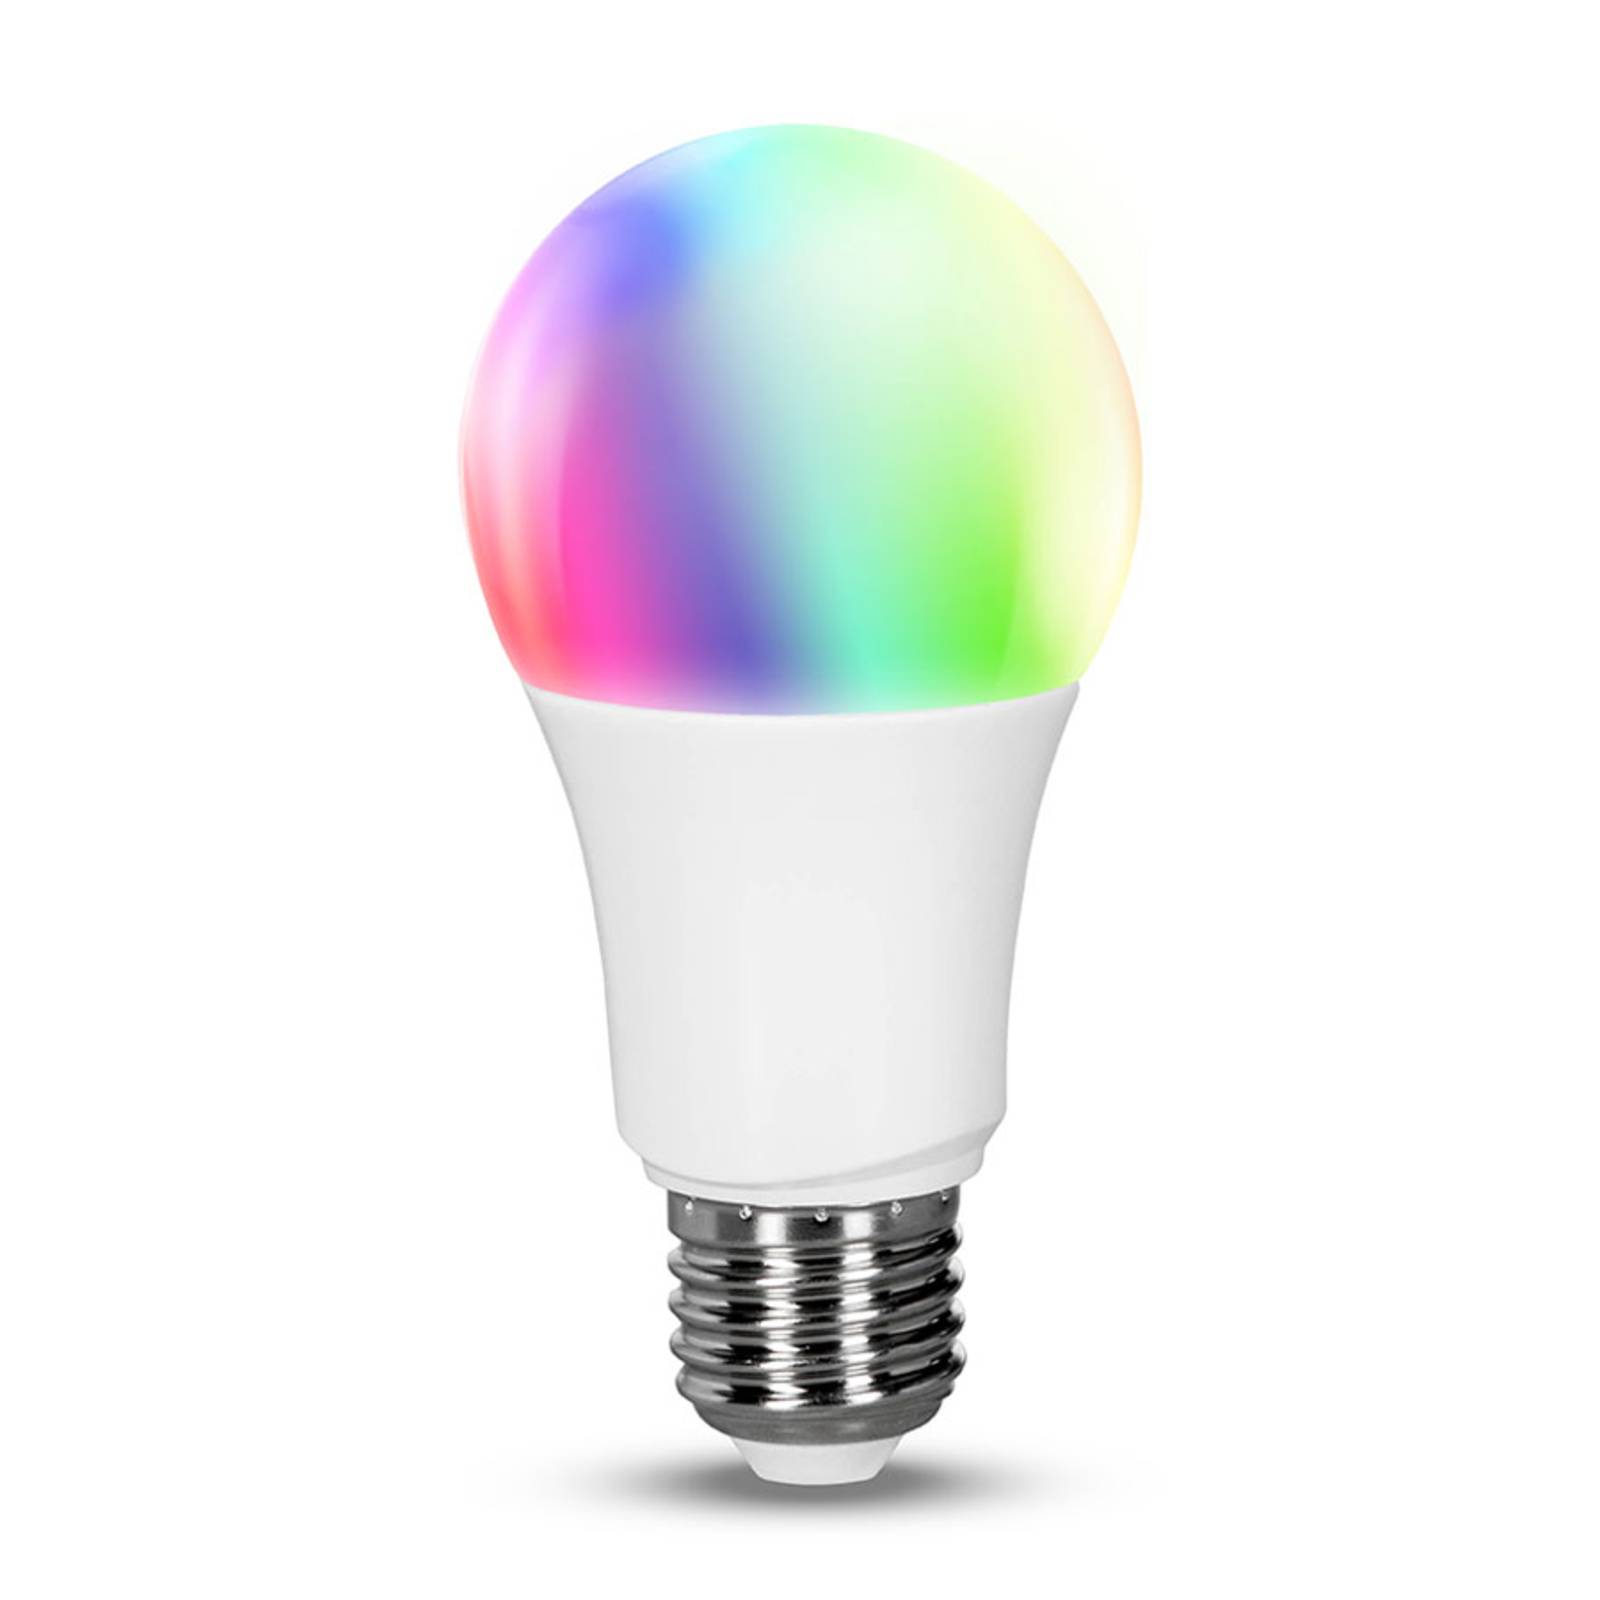 Müller Licht tint white+color LED-Lampe E27 9W